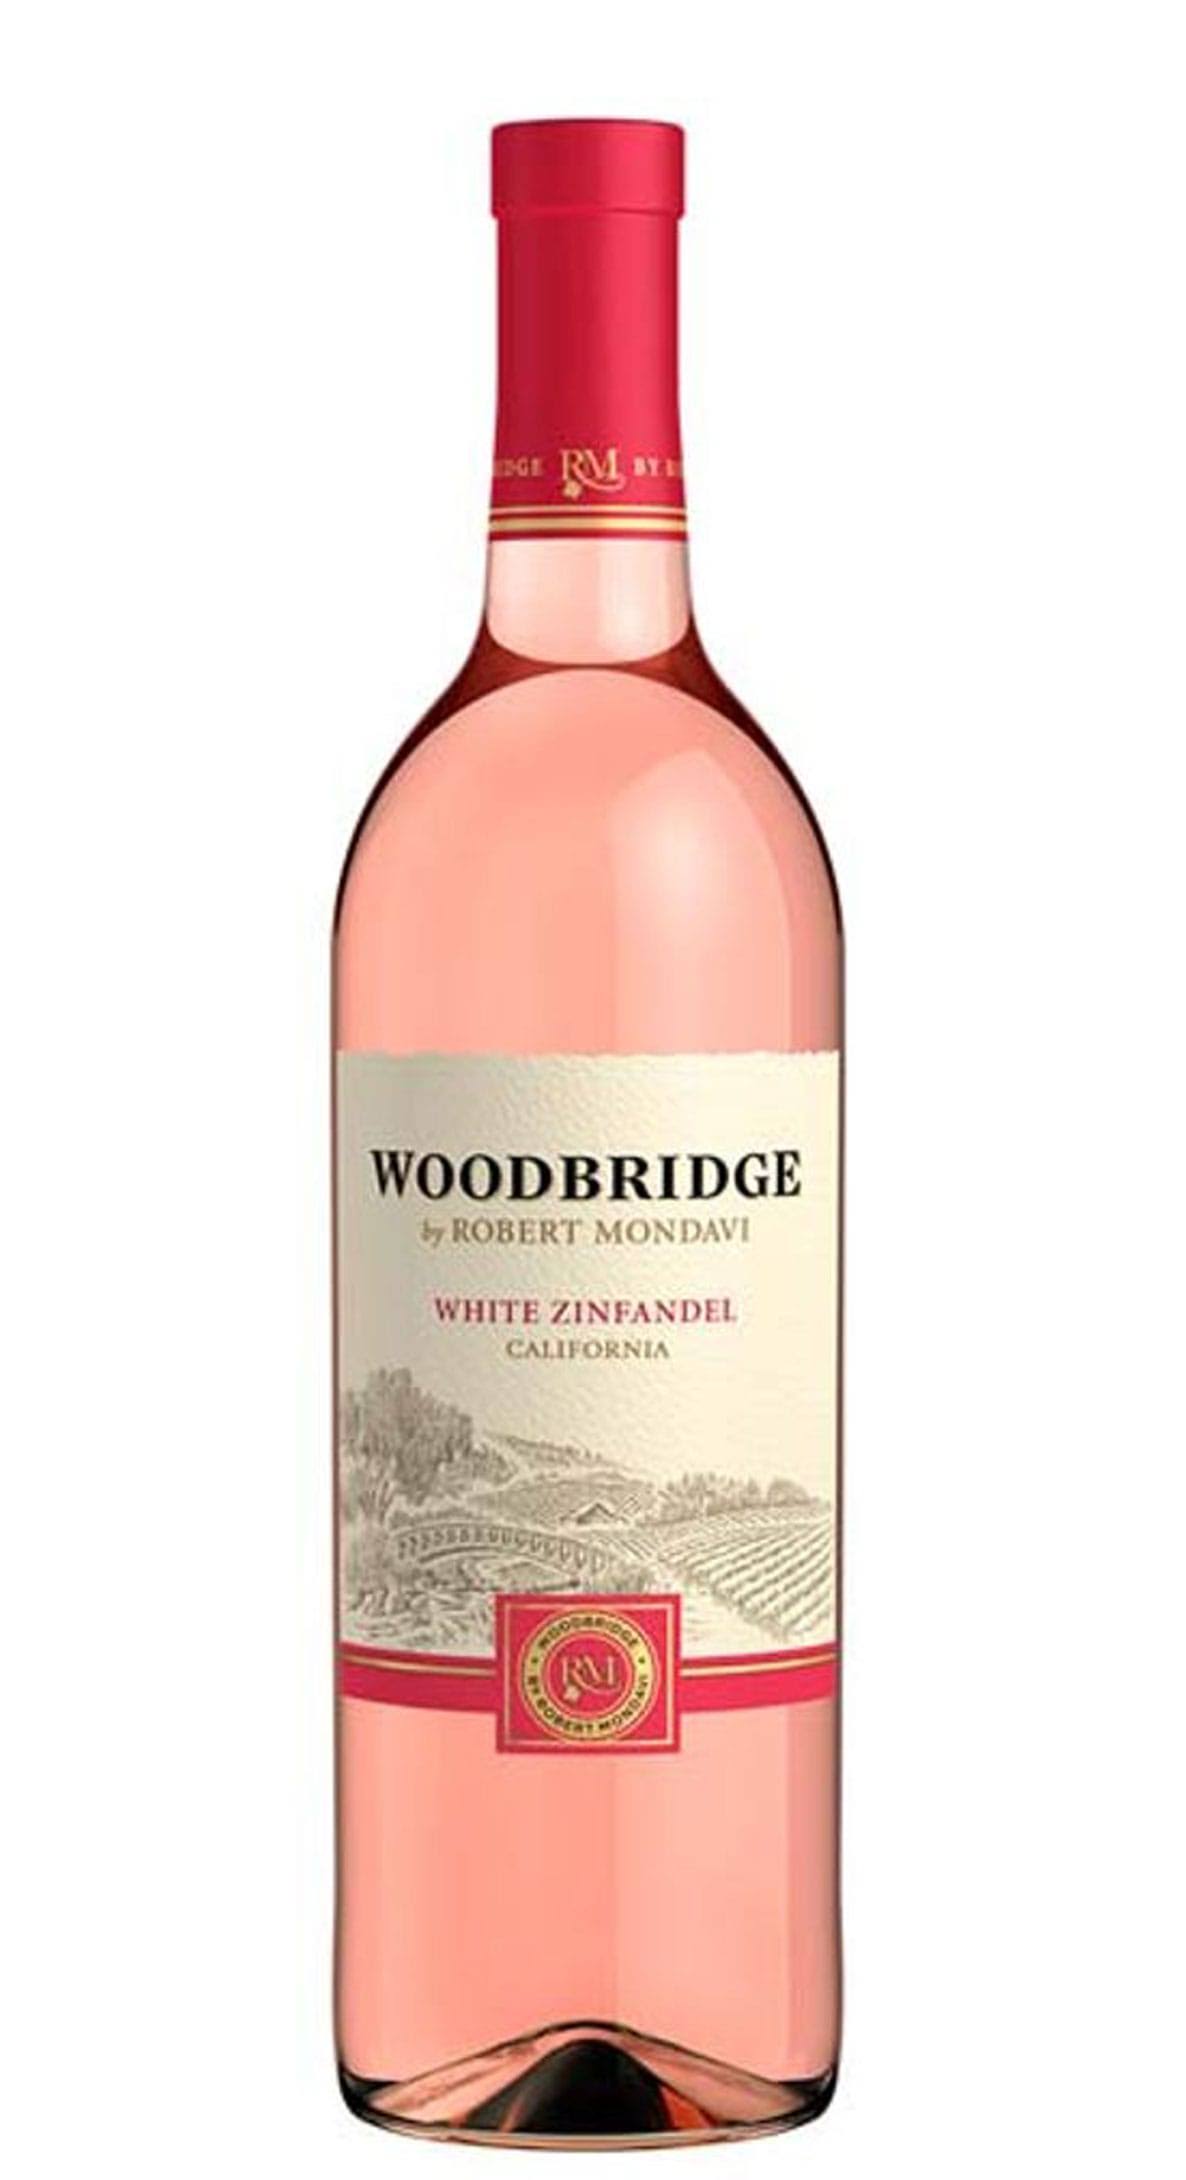 Woodbridge by Robert Mondavi White Zinfandel Wine